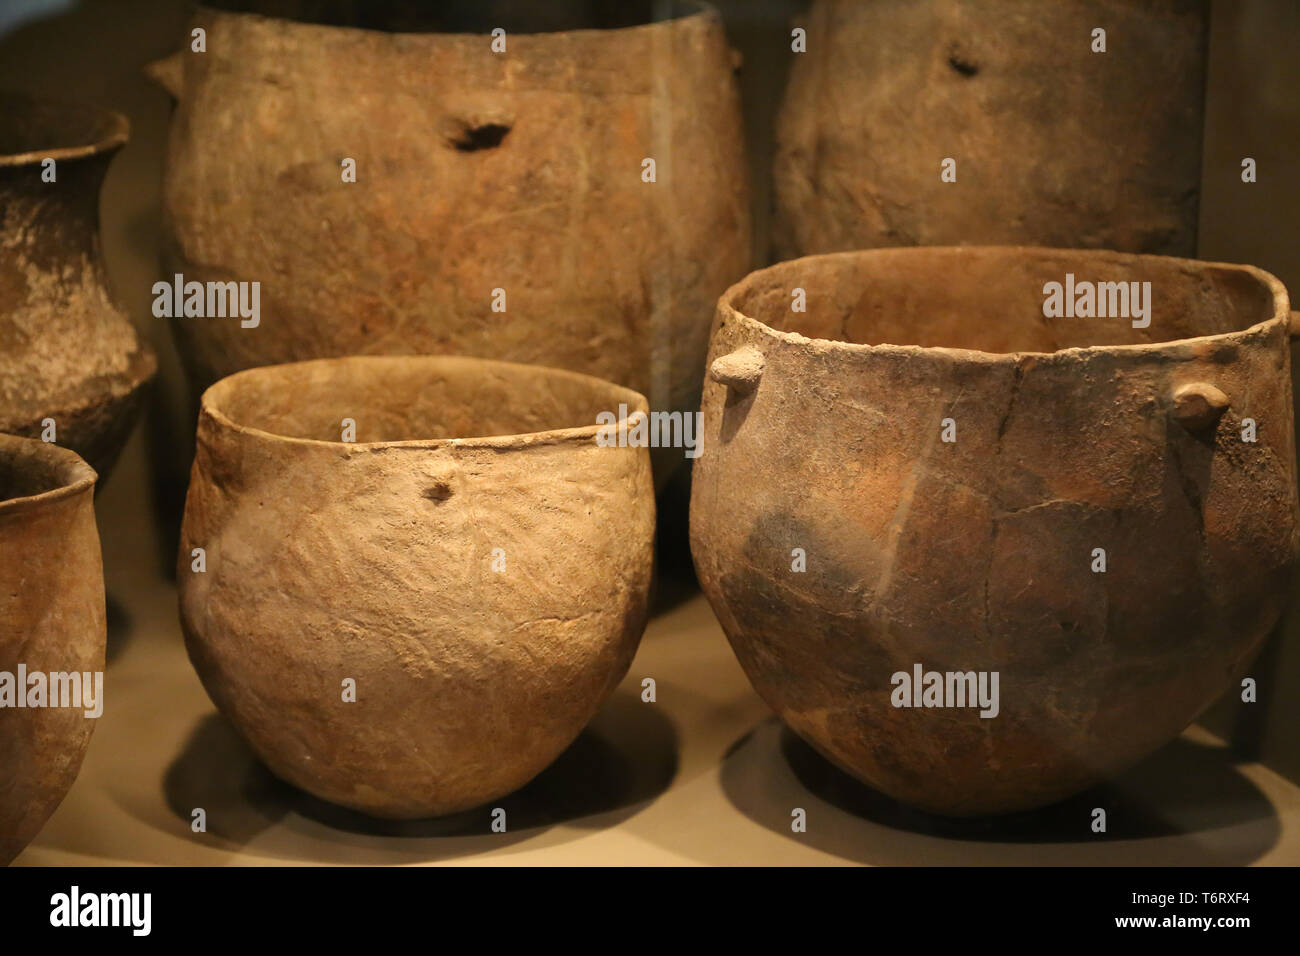 Urnas funerarias fotografías e imágenes de alta resolución - Alamy